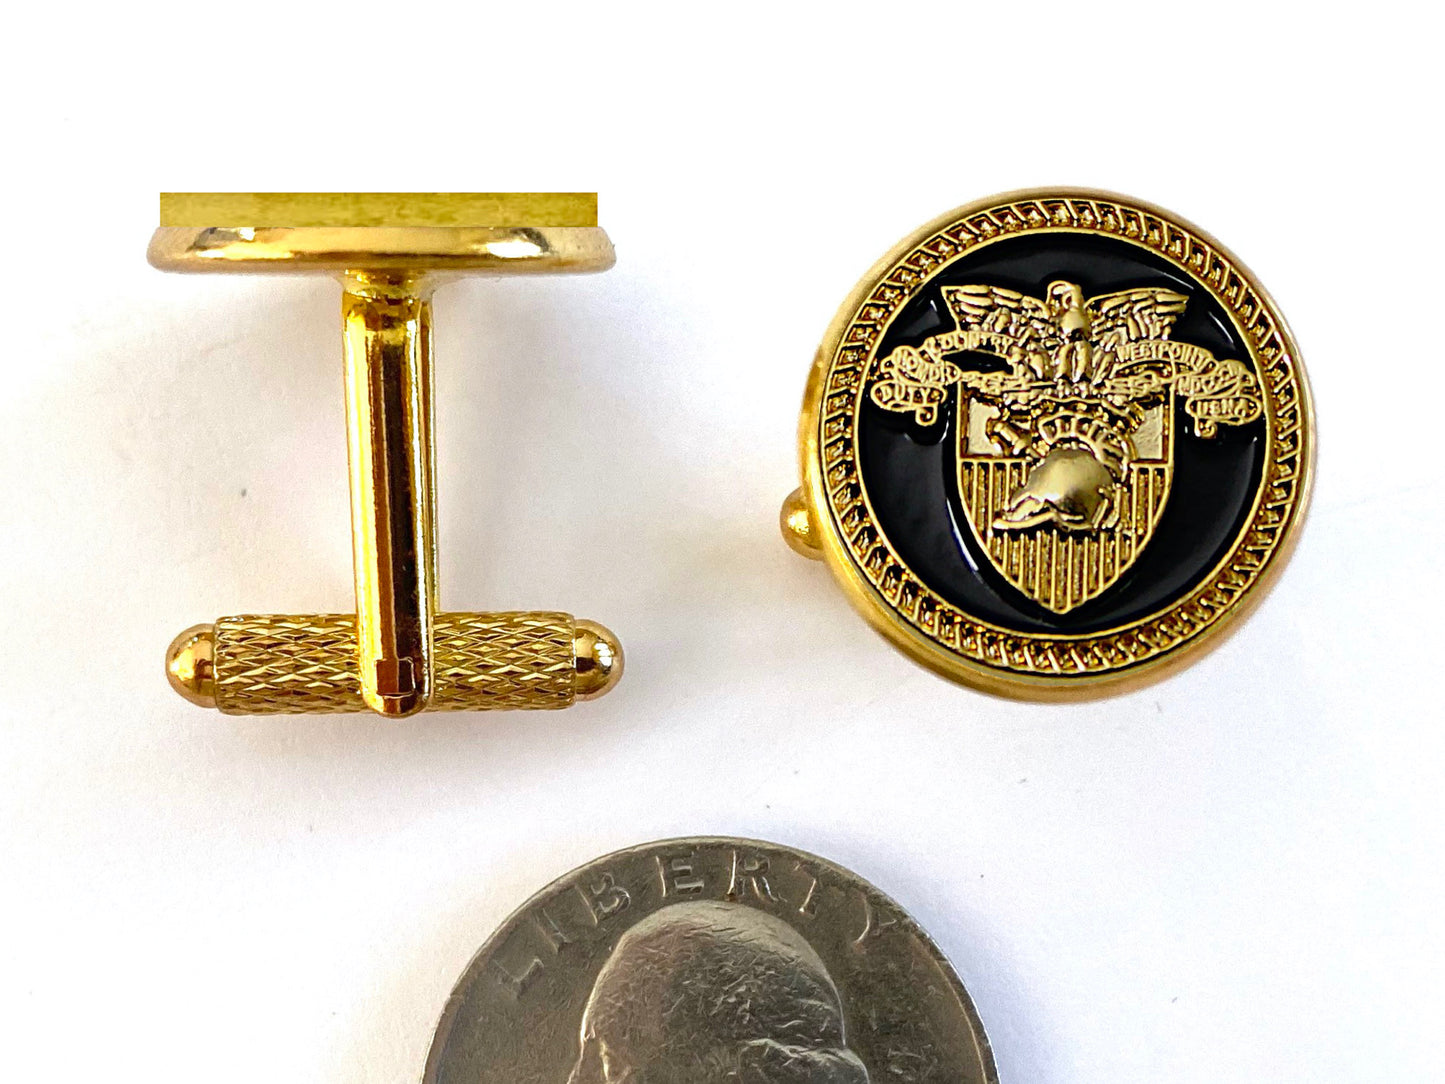 United States Military Academy (USMA) Cufflinks